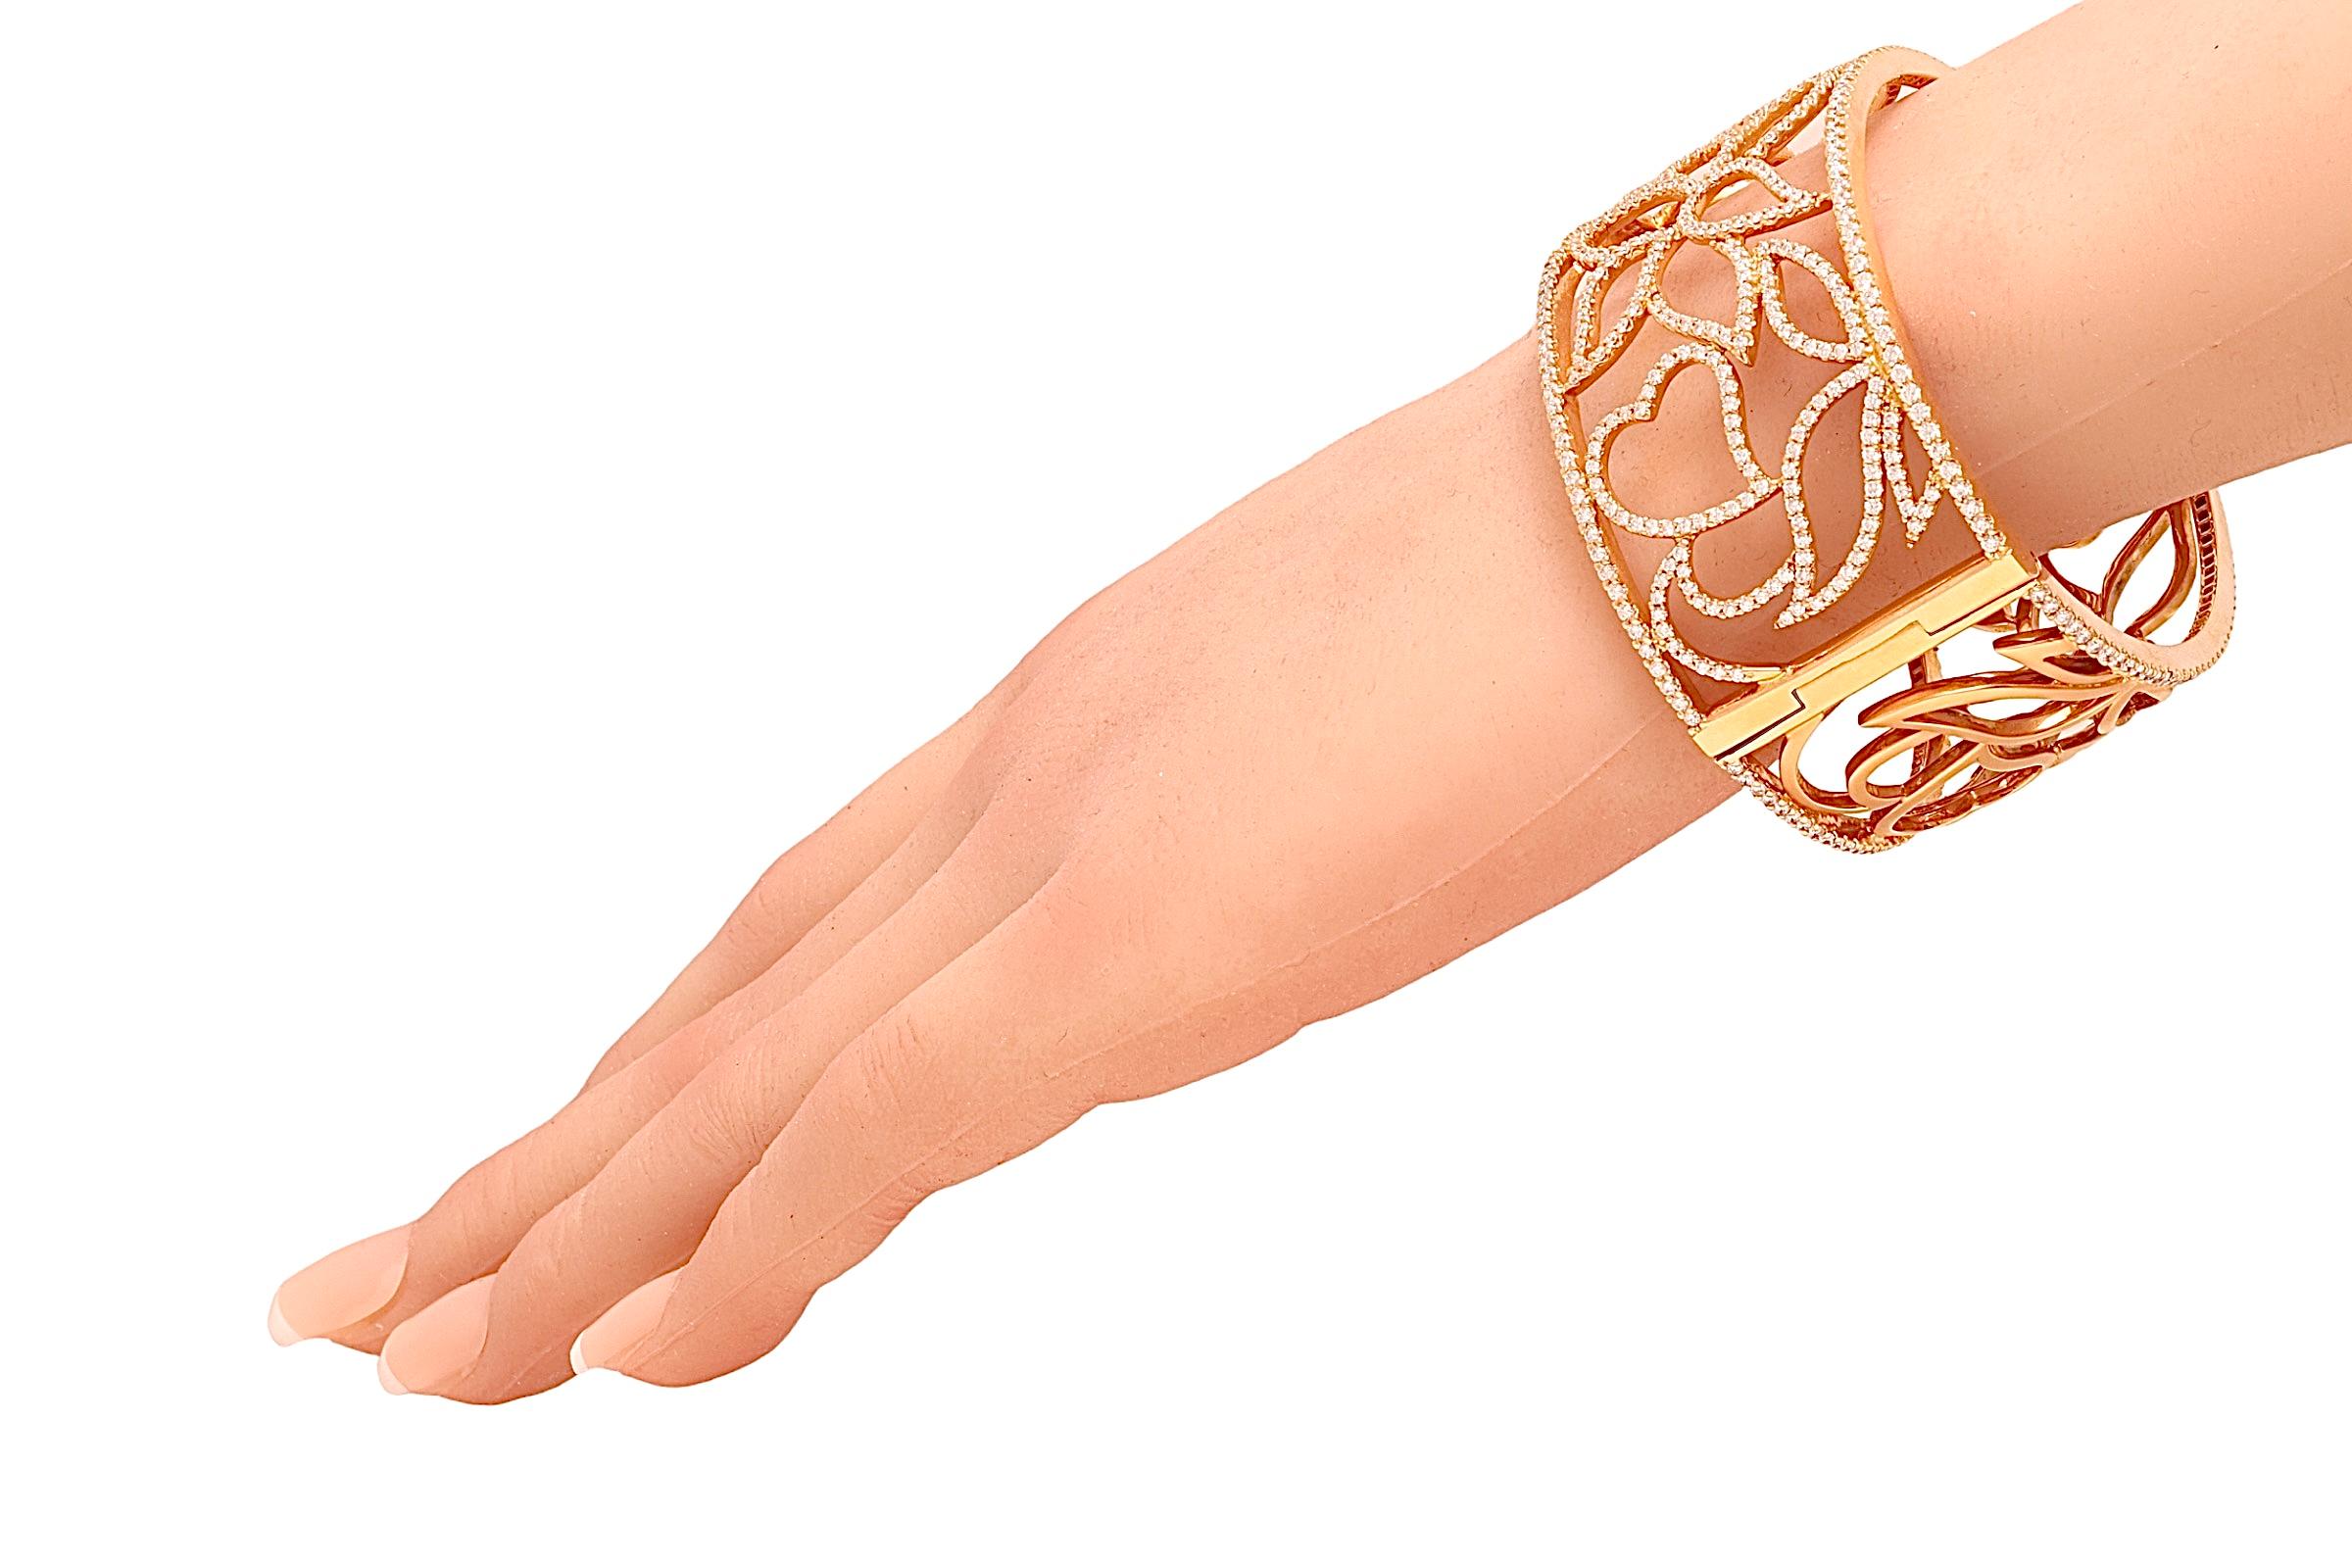 18kt Pink Gold Cuff Bracelet, Flower Design, set with 5.87 ct. Diamonds, 2 Sided For Sale 10